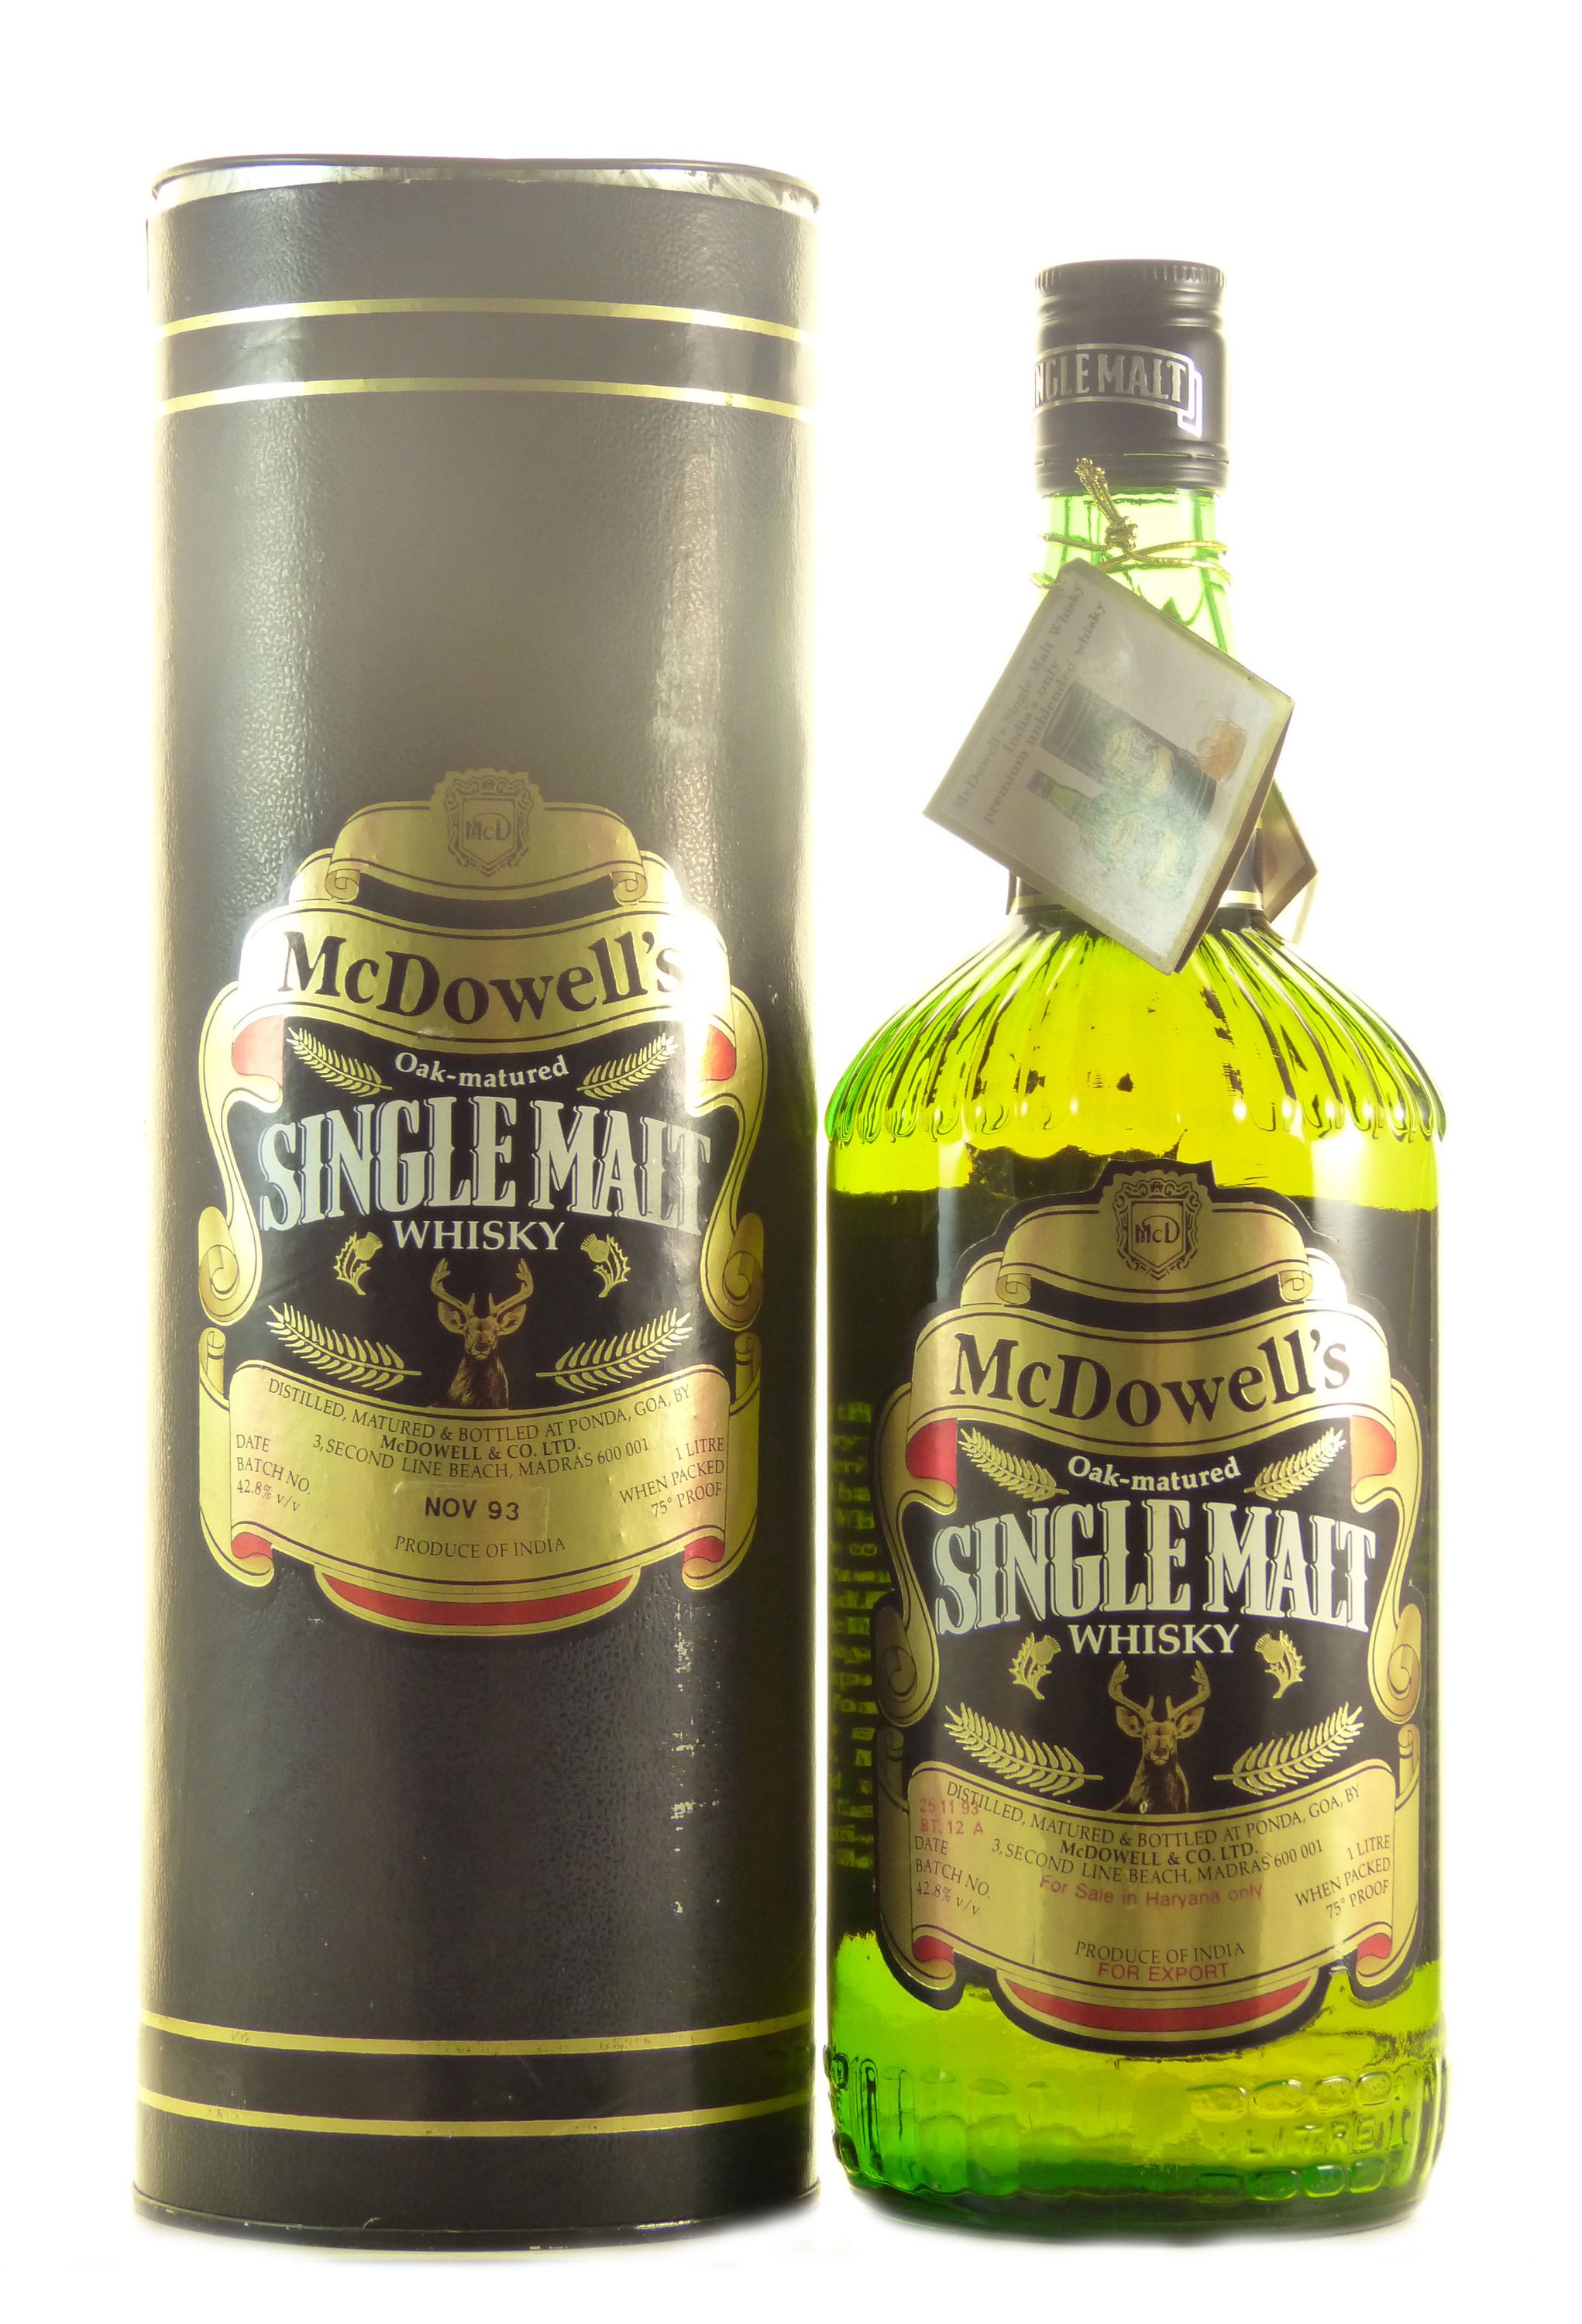 McDowell's Single Malt Whiskey 1993 Indian Single Malt Whisky, 1.0l, alc. 42.8% by volume